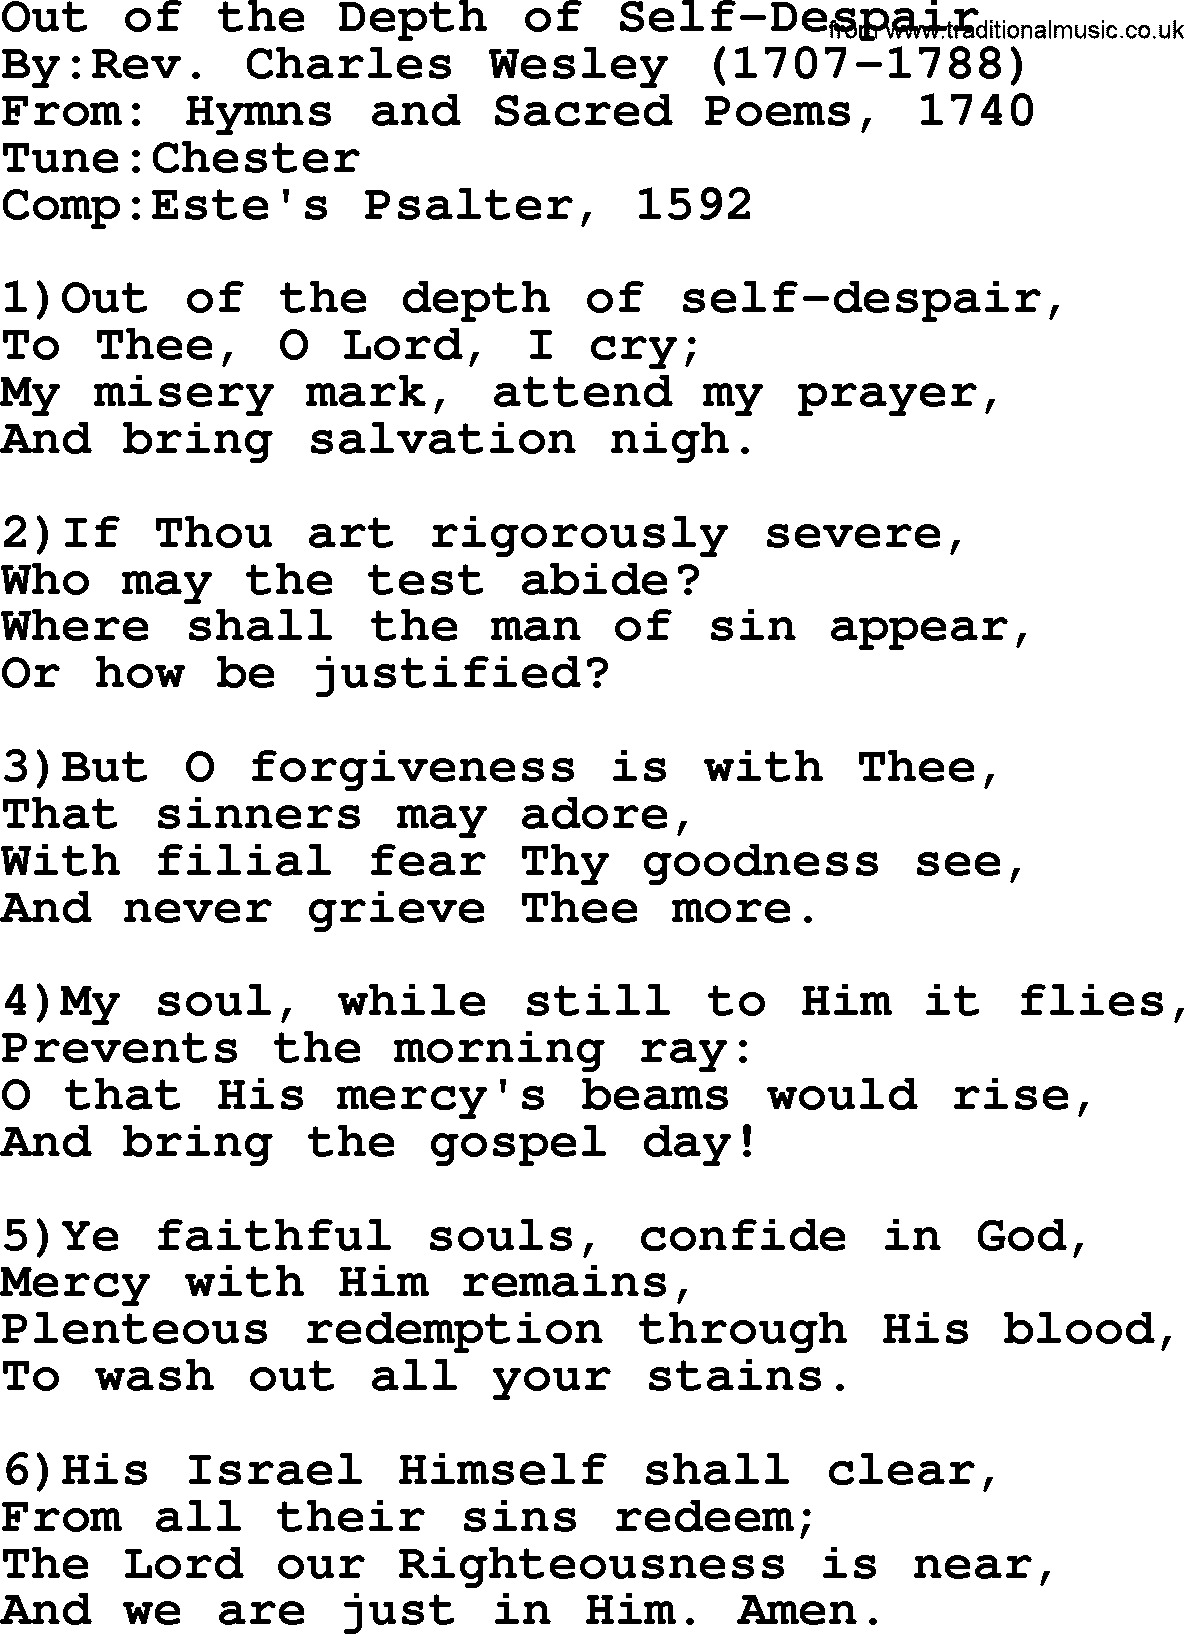 Methodist Hymn: Out Of The Depth Of Self-despair, lyrics